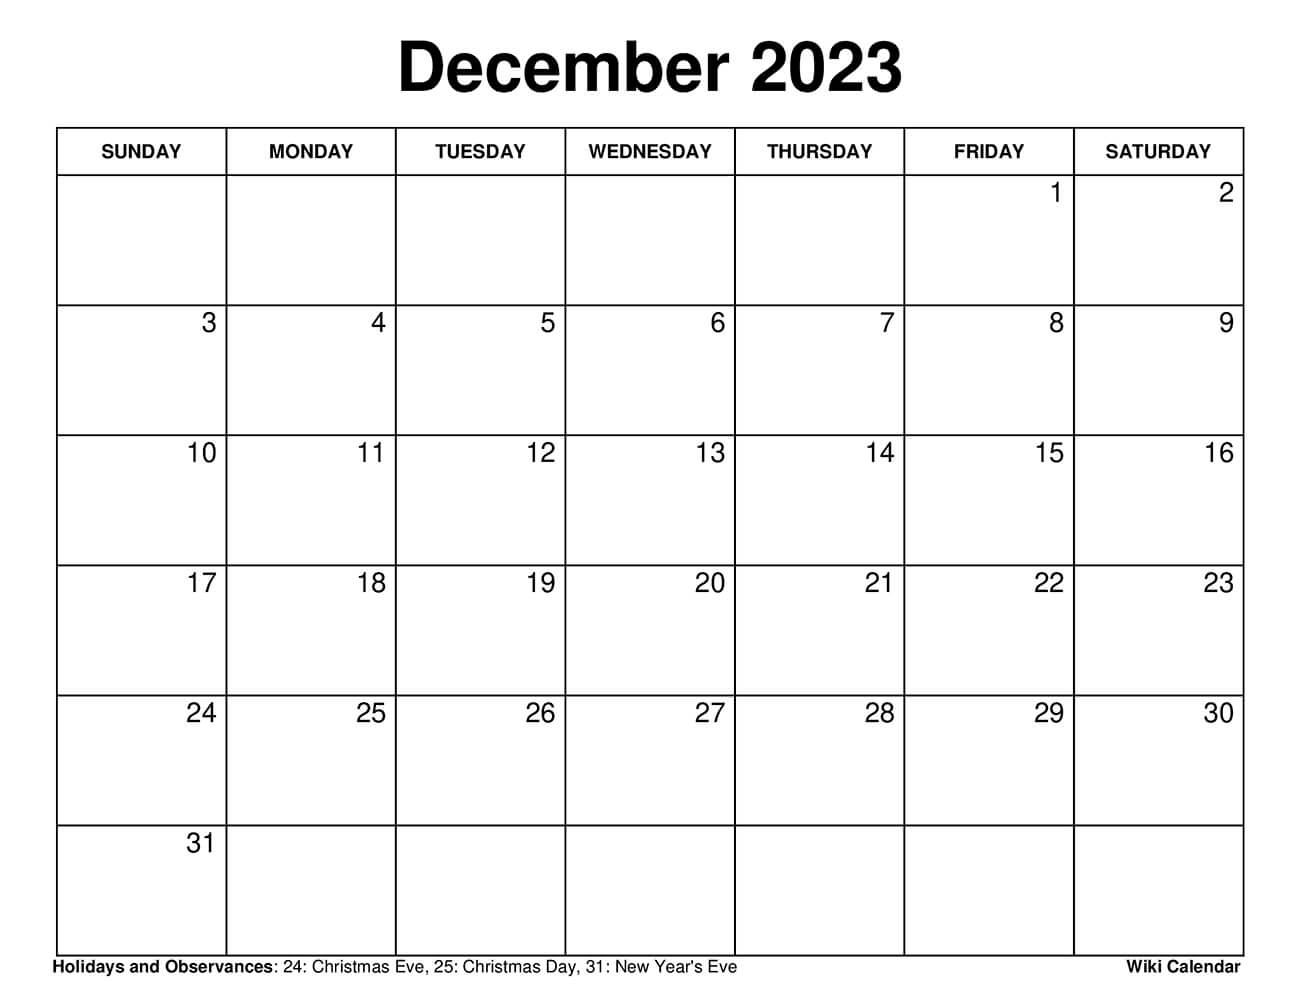 December 2023 Calendar Printable with Holidays